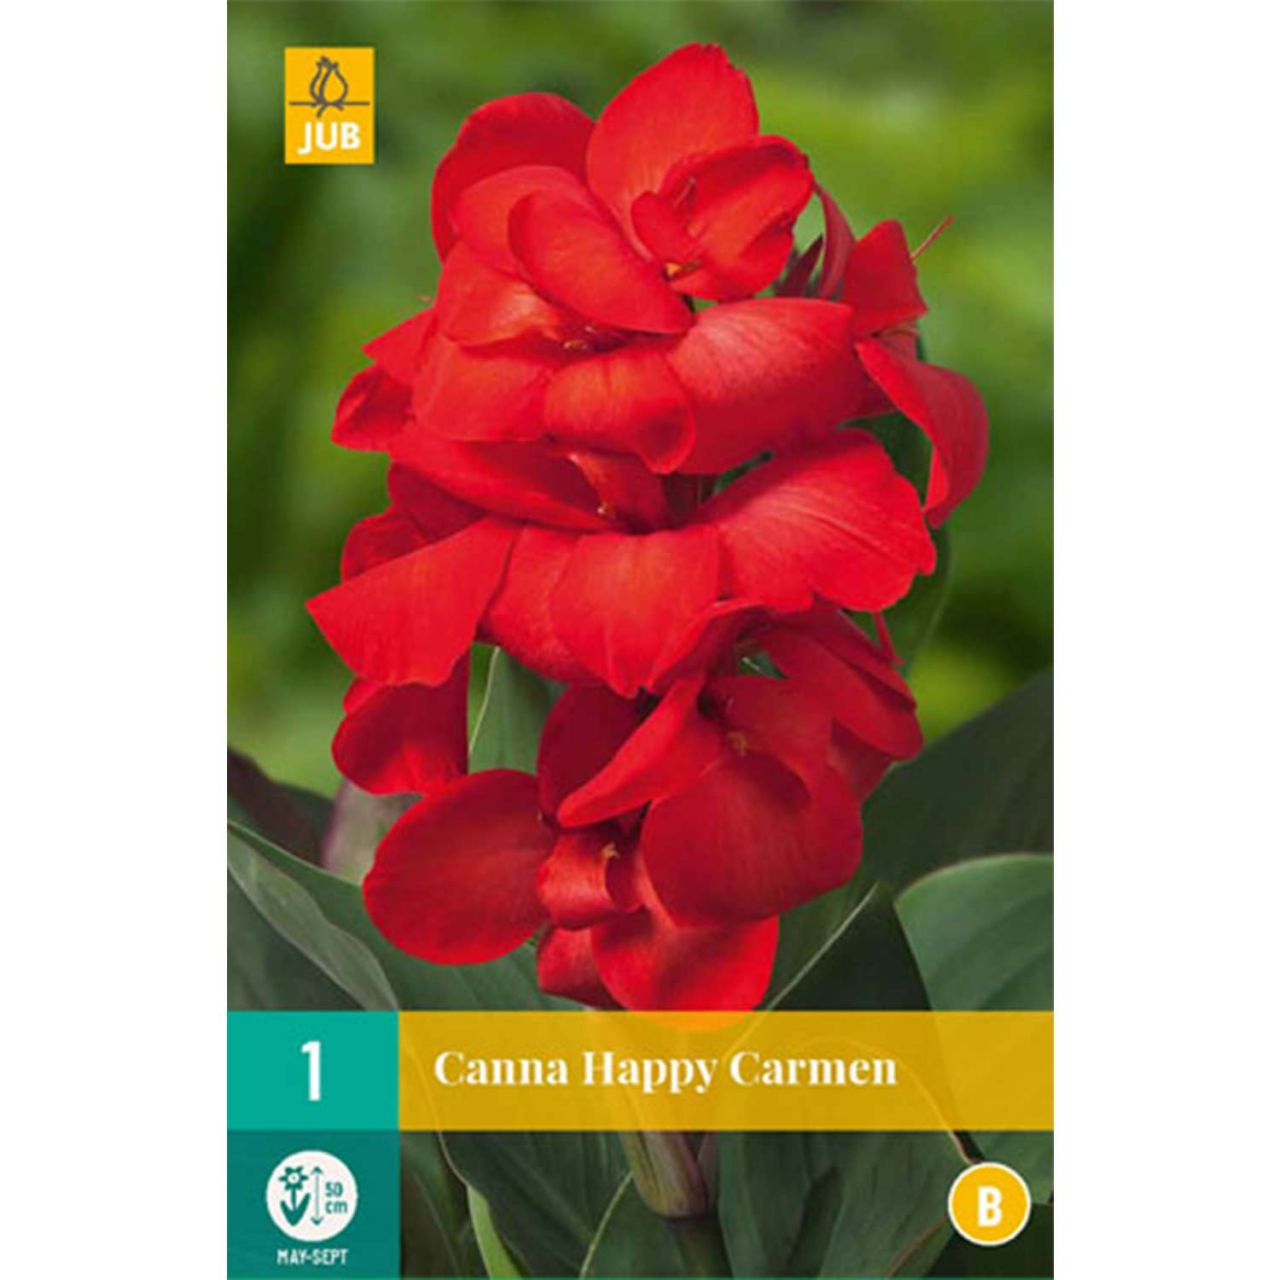 Kategorie <b>Frühlings-Blumenzwiebeln </b> - Zwerg-Canna 'Happy Carmen' - 1 Stück - Canna indica